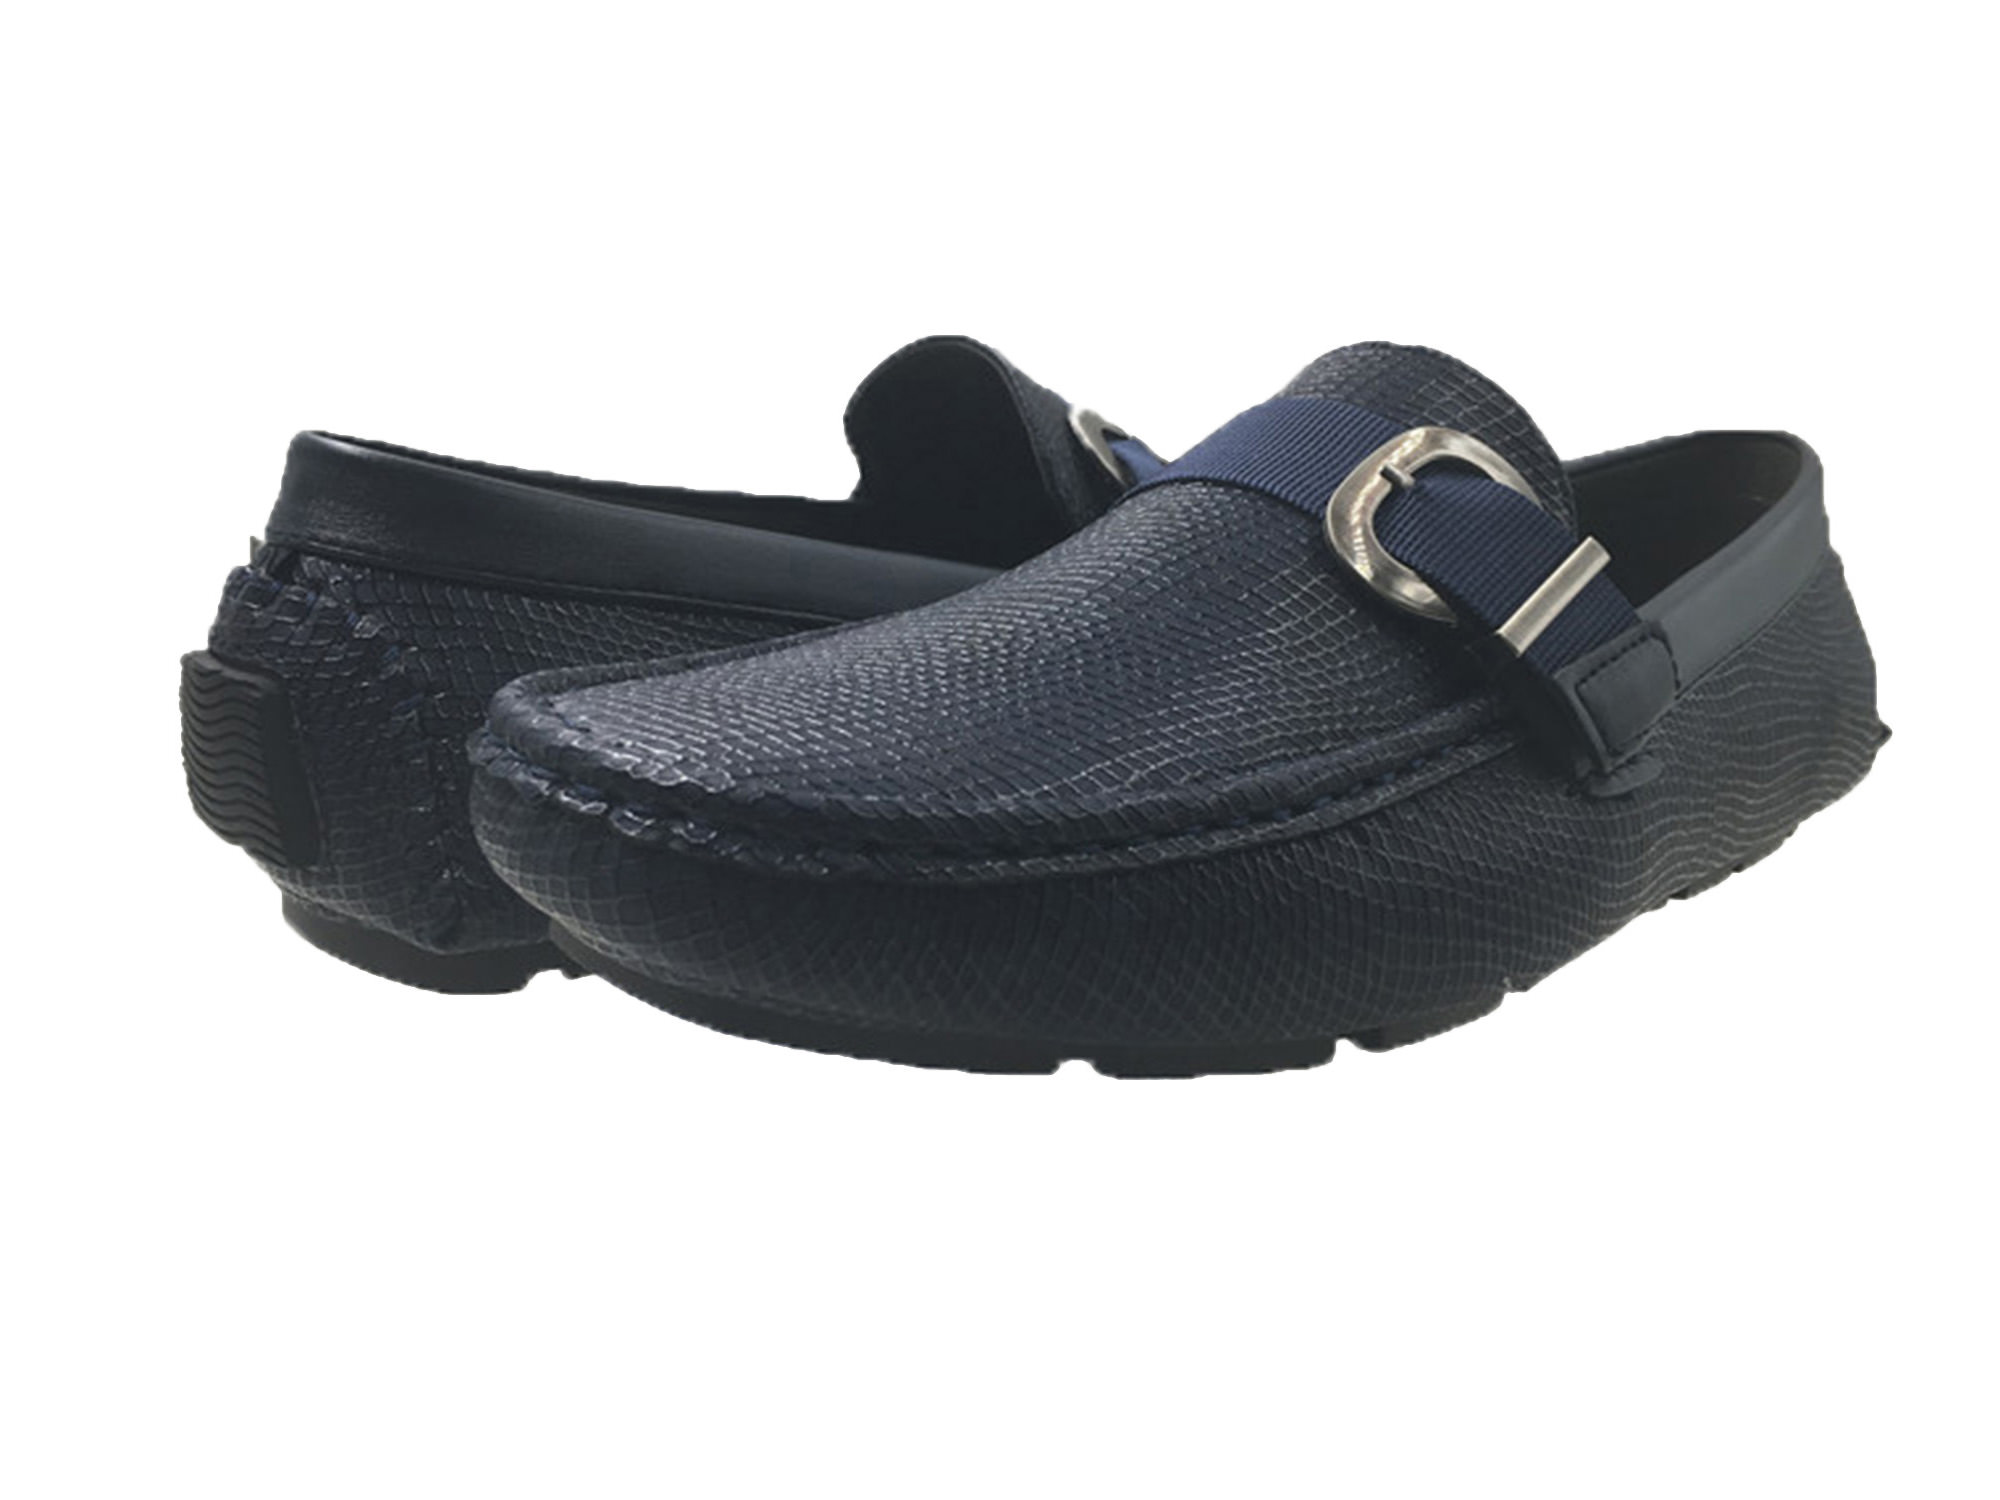 Mecca ME-4103 NORM Mens Belt Strap Slip-On Loafers Shoes - image 2 of 8